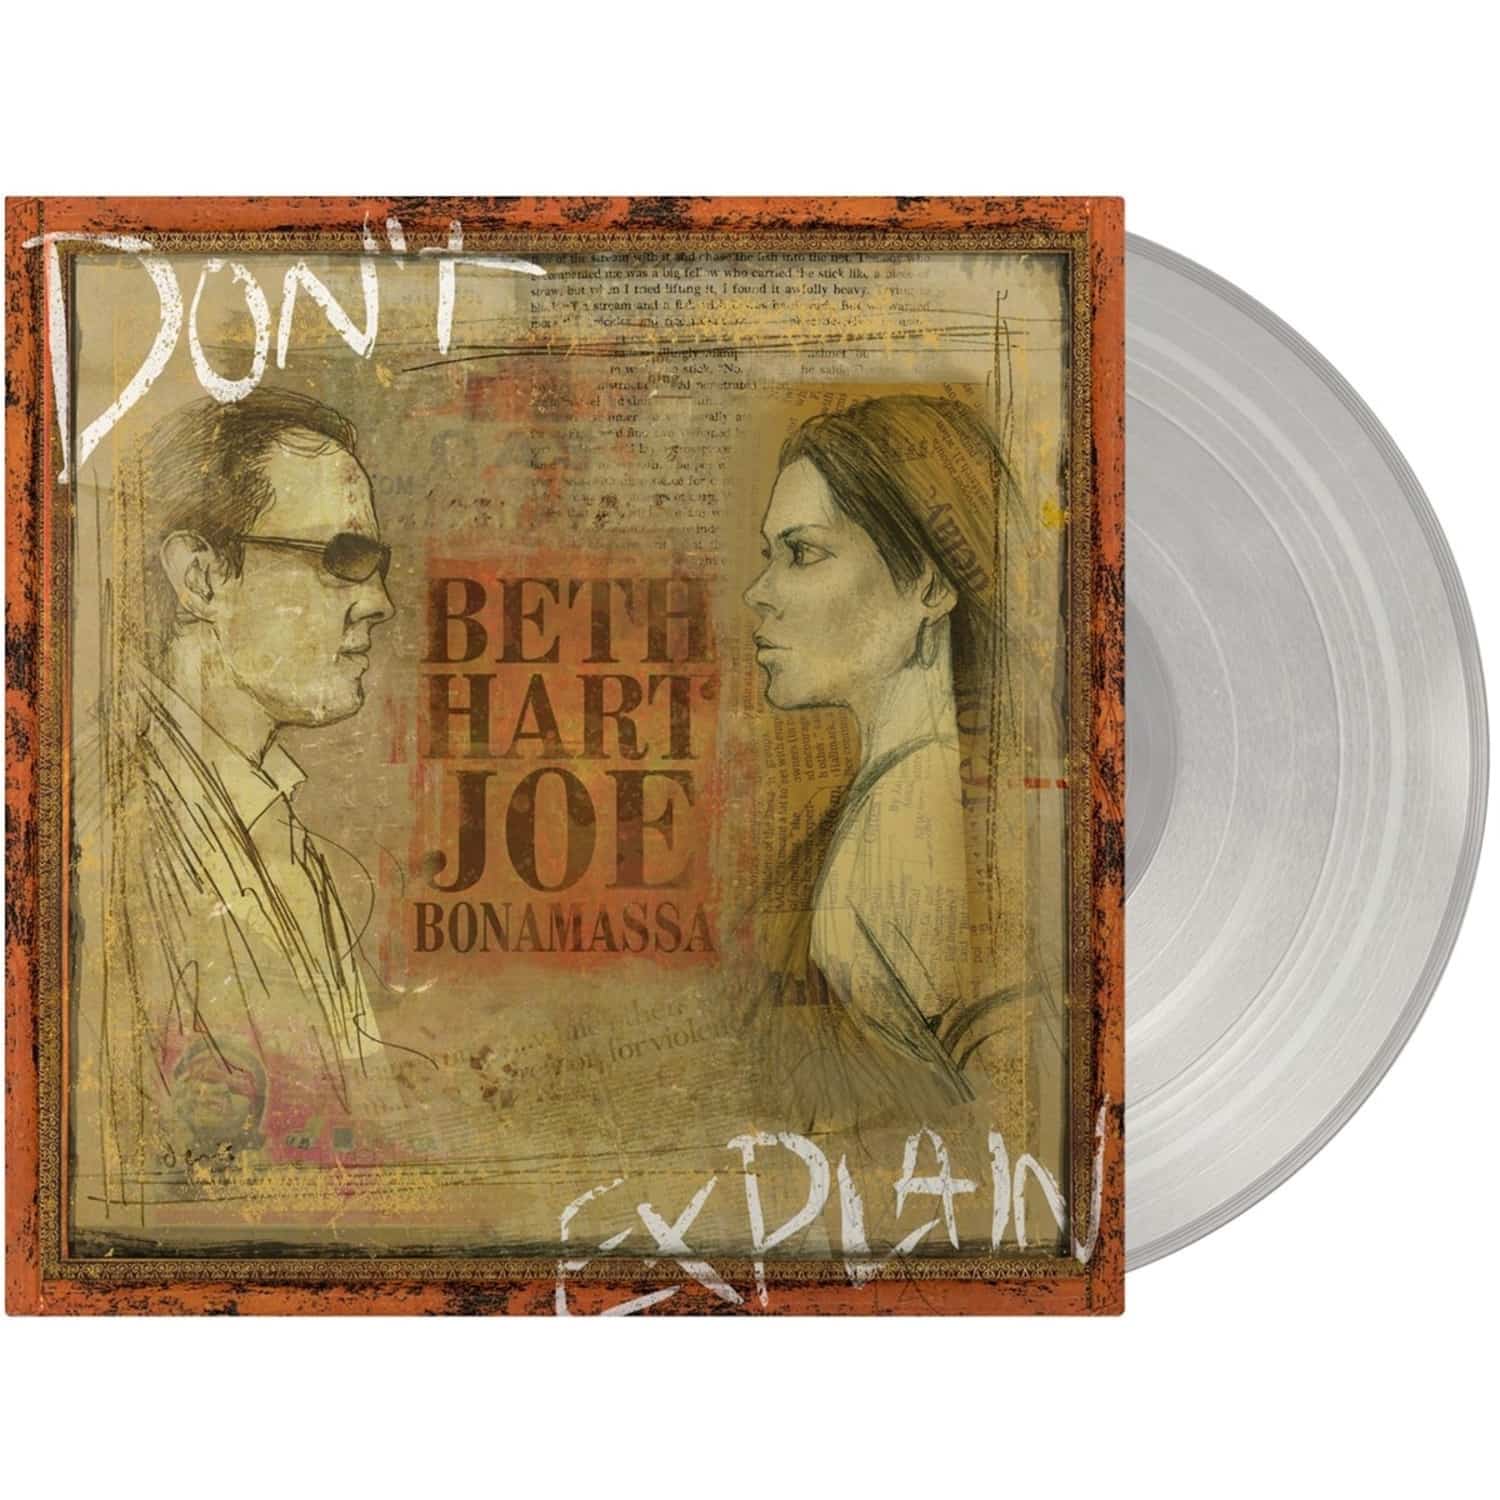 Beth Hart / Joe Bonamassa - DON T EXPLAIN 